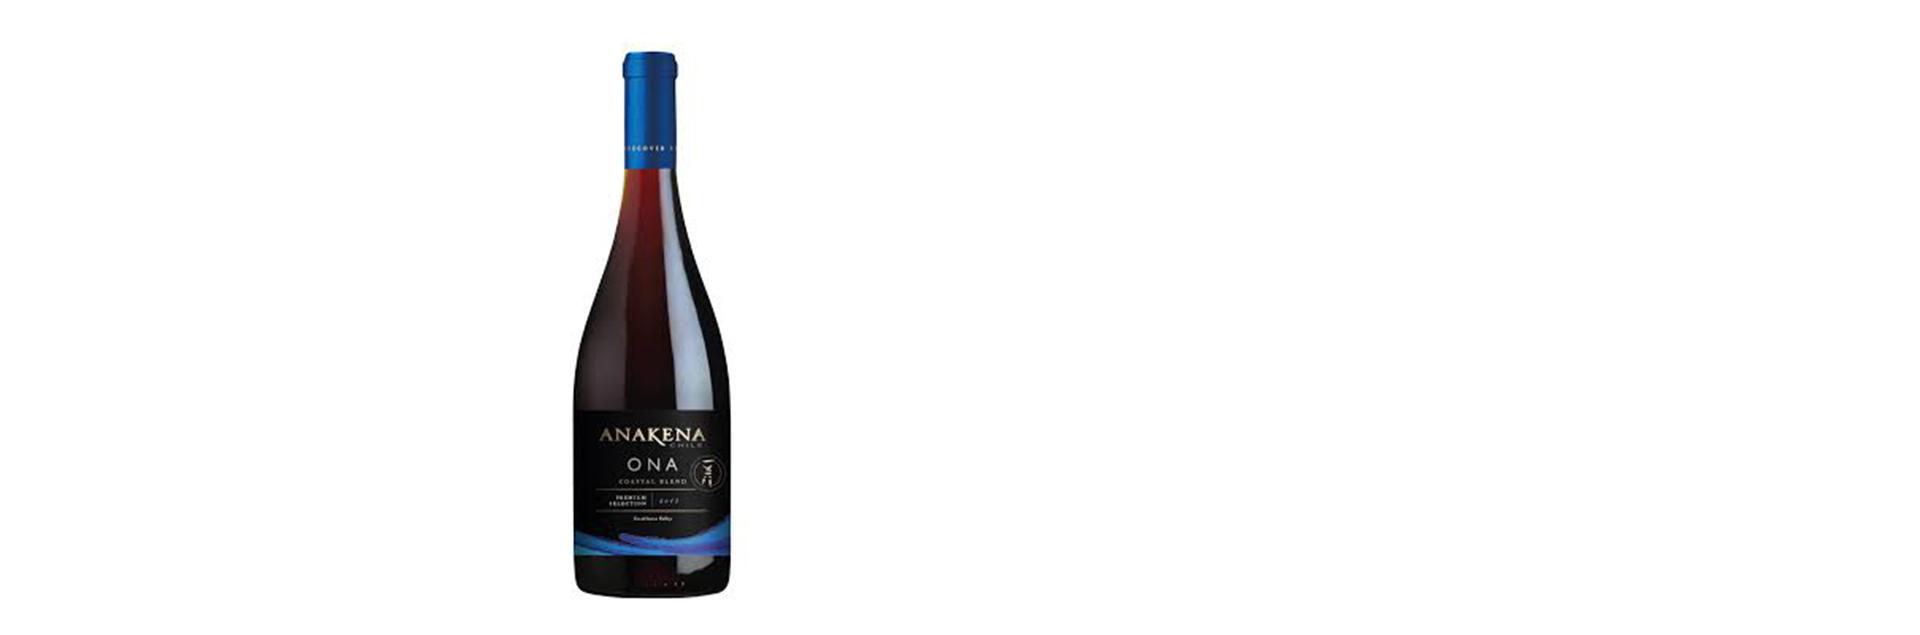 Rượu vang Chile Anakena ONA Premium Selection Coastal Blend